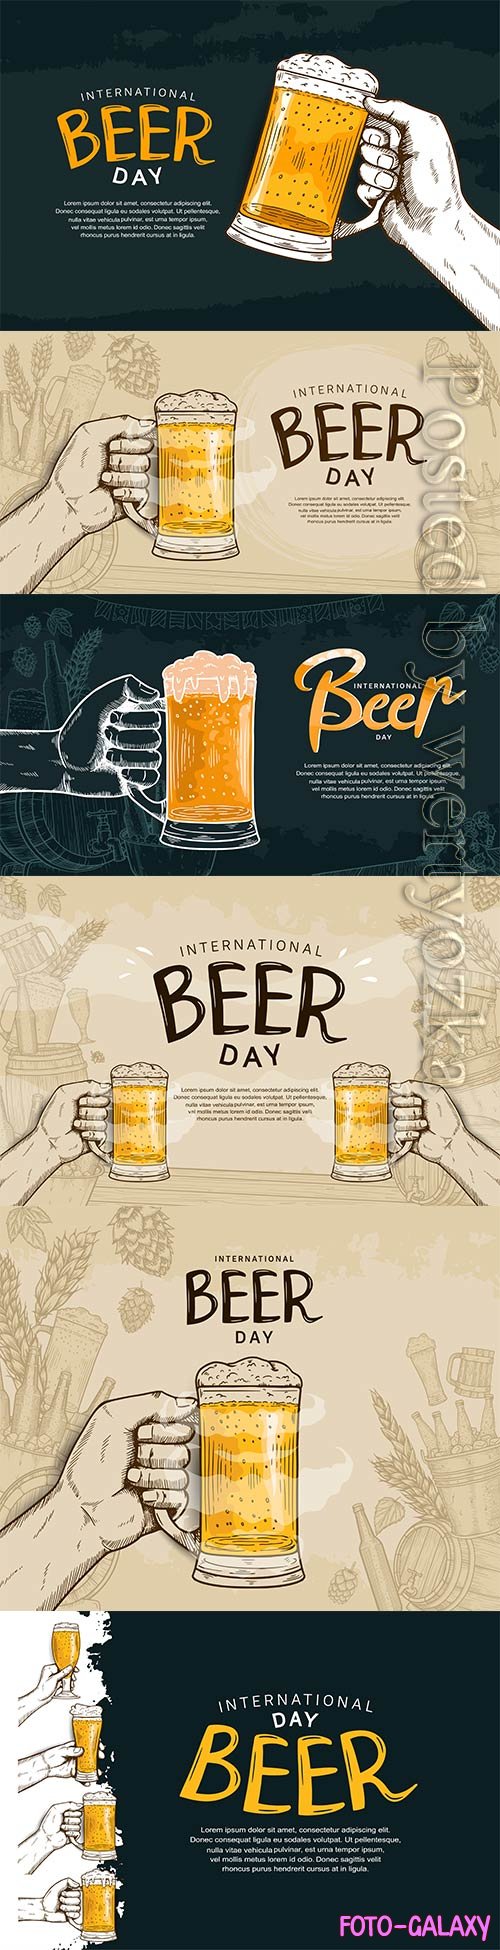 International beer day illustration design